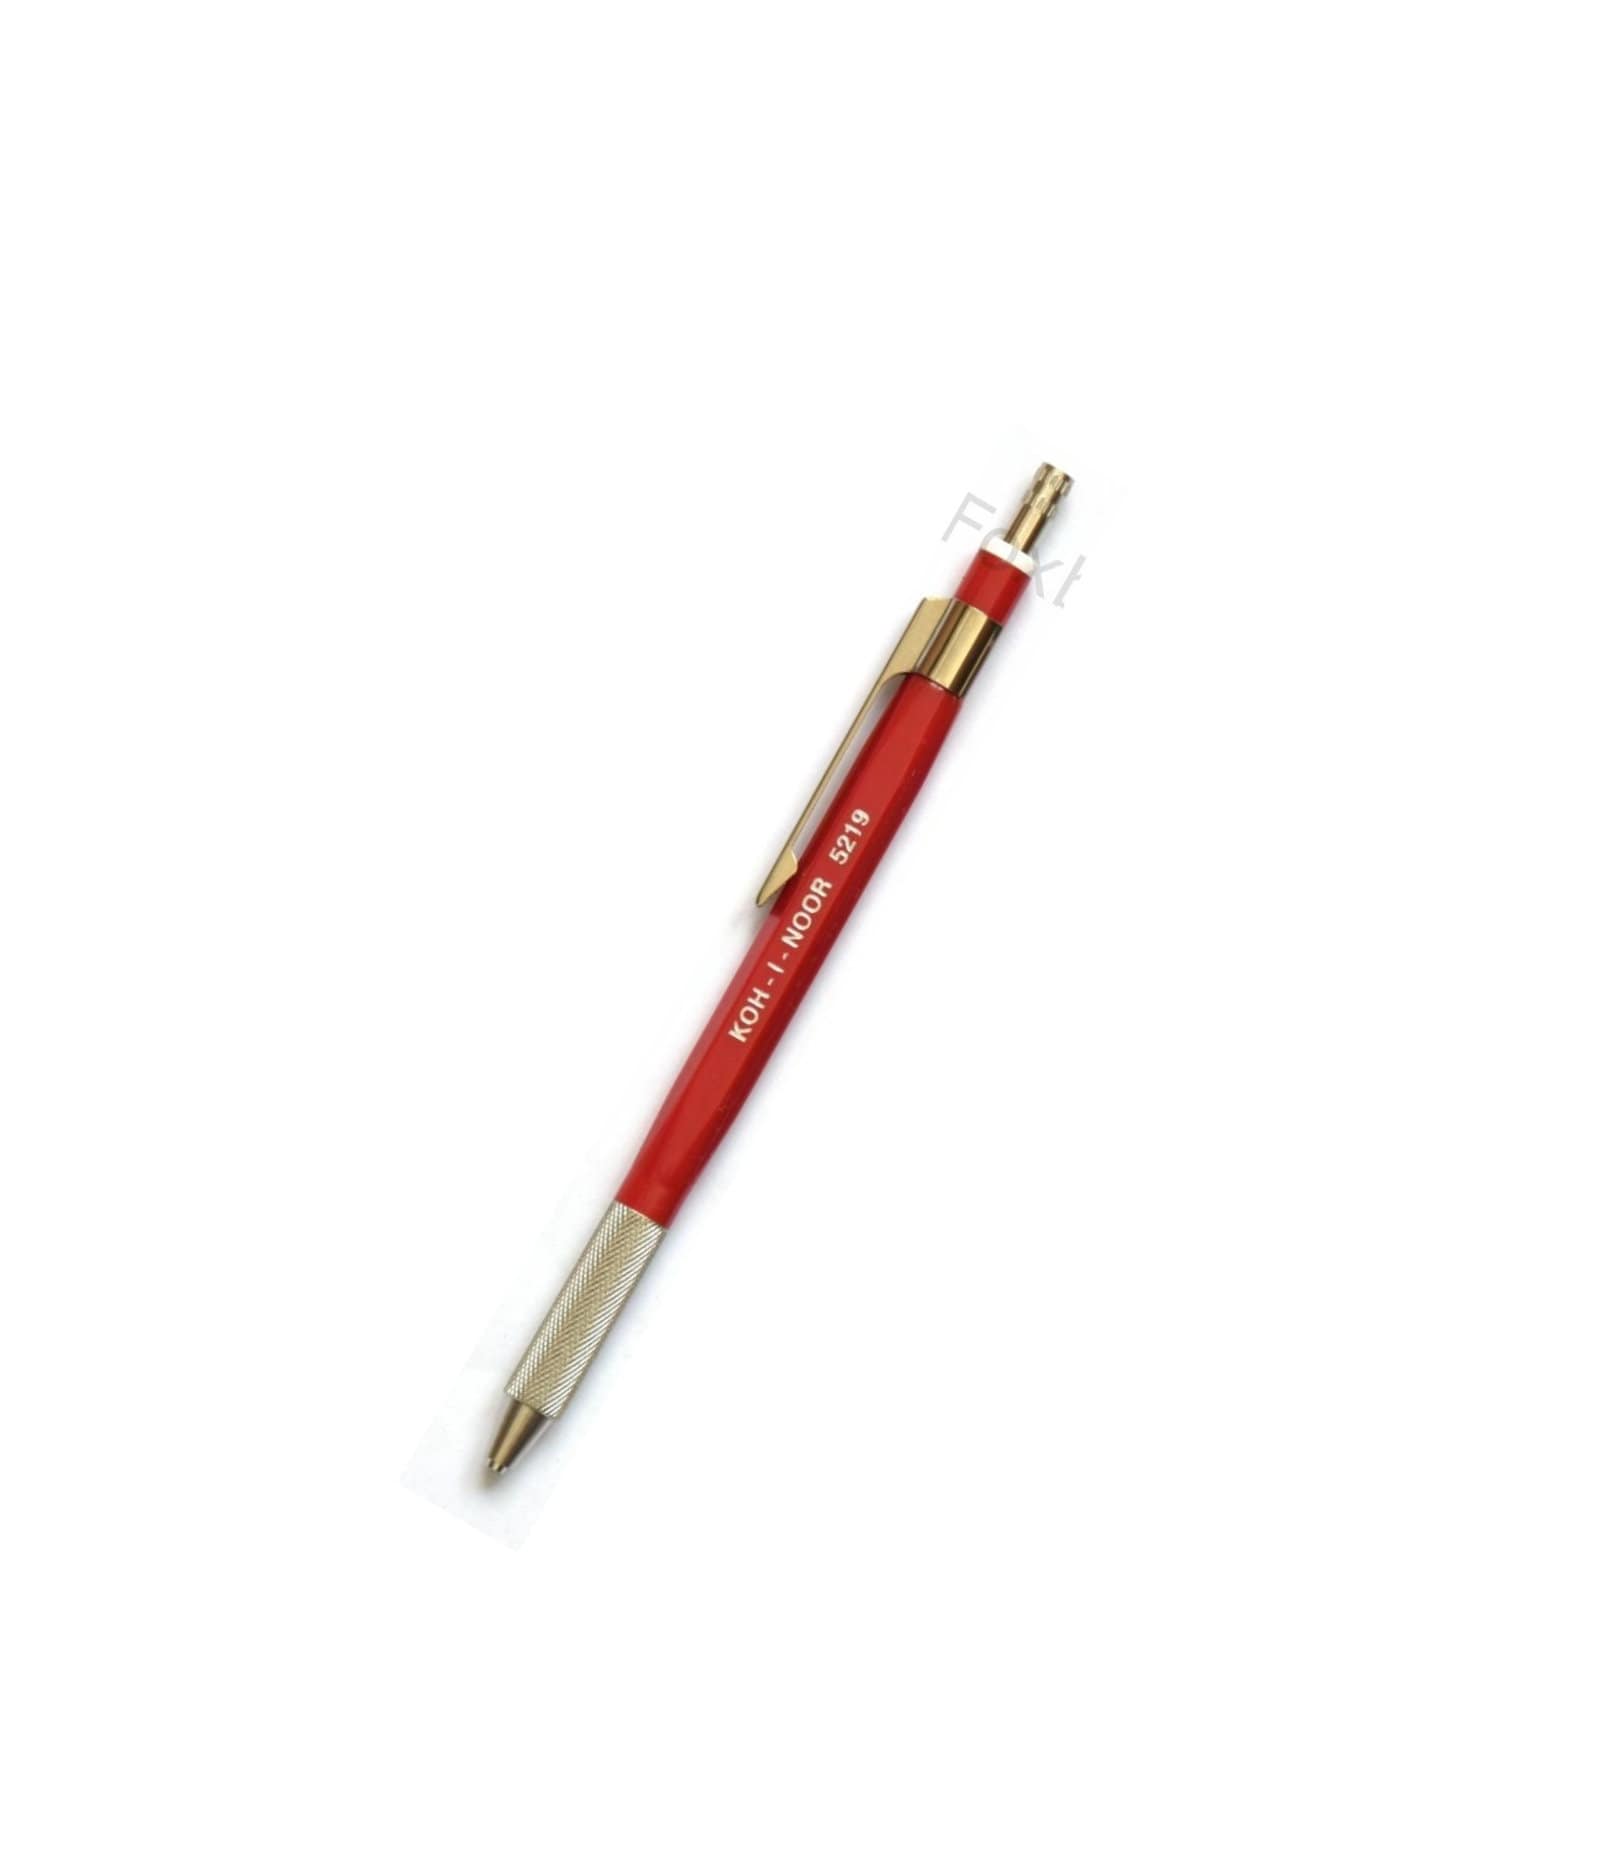 All Metal Short Mechanical Pencil 2mm Pocket Clutch Leadholder Koh I Noor  Versatil 5228 With Sharpener and Clip Black Yellow Red -  Israel